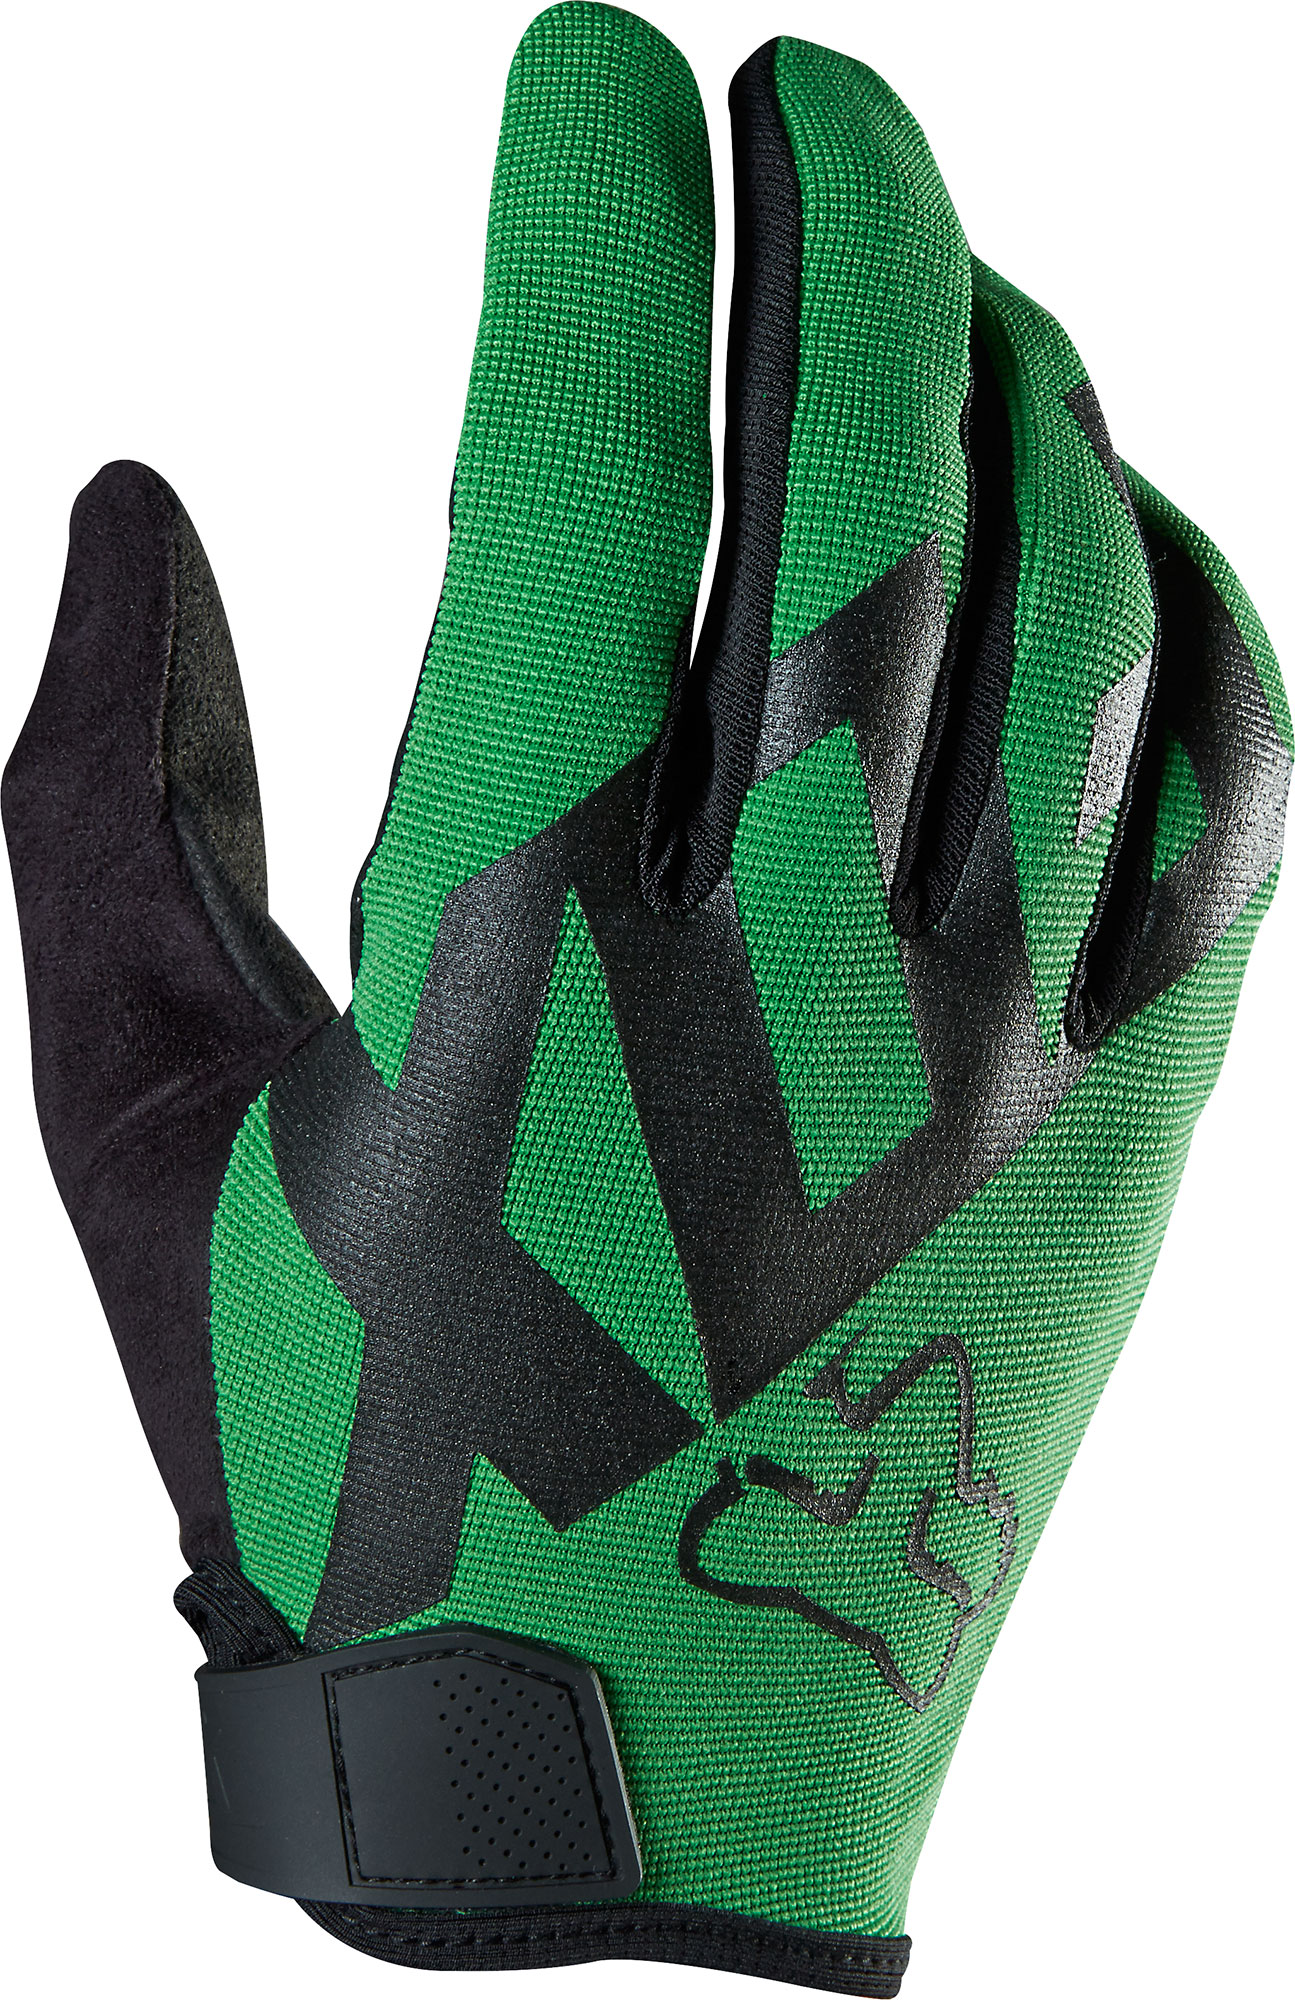 Fox Racing велоперчатки. Fox Ranger Glove. Перчатки Фокс мотокросс зеленые. Fox. Glove Ranger GLD. Fox ranger